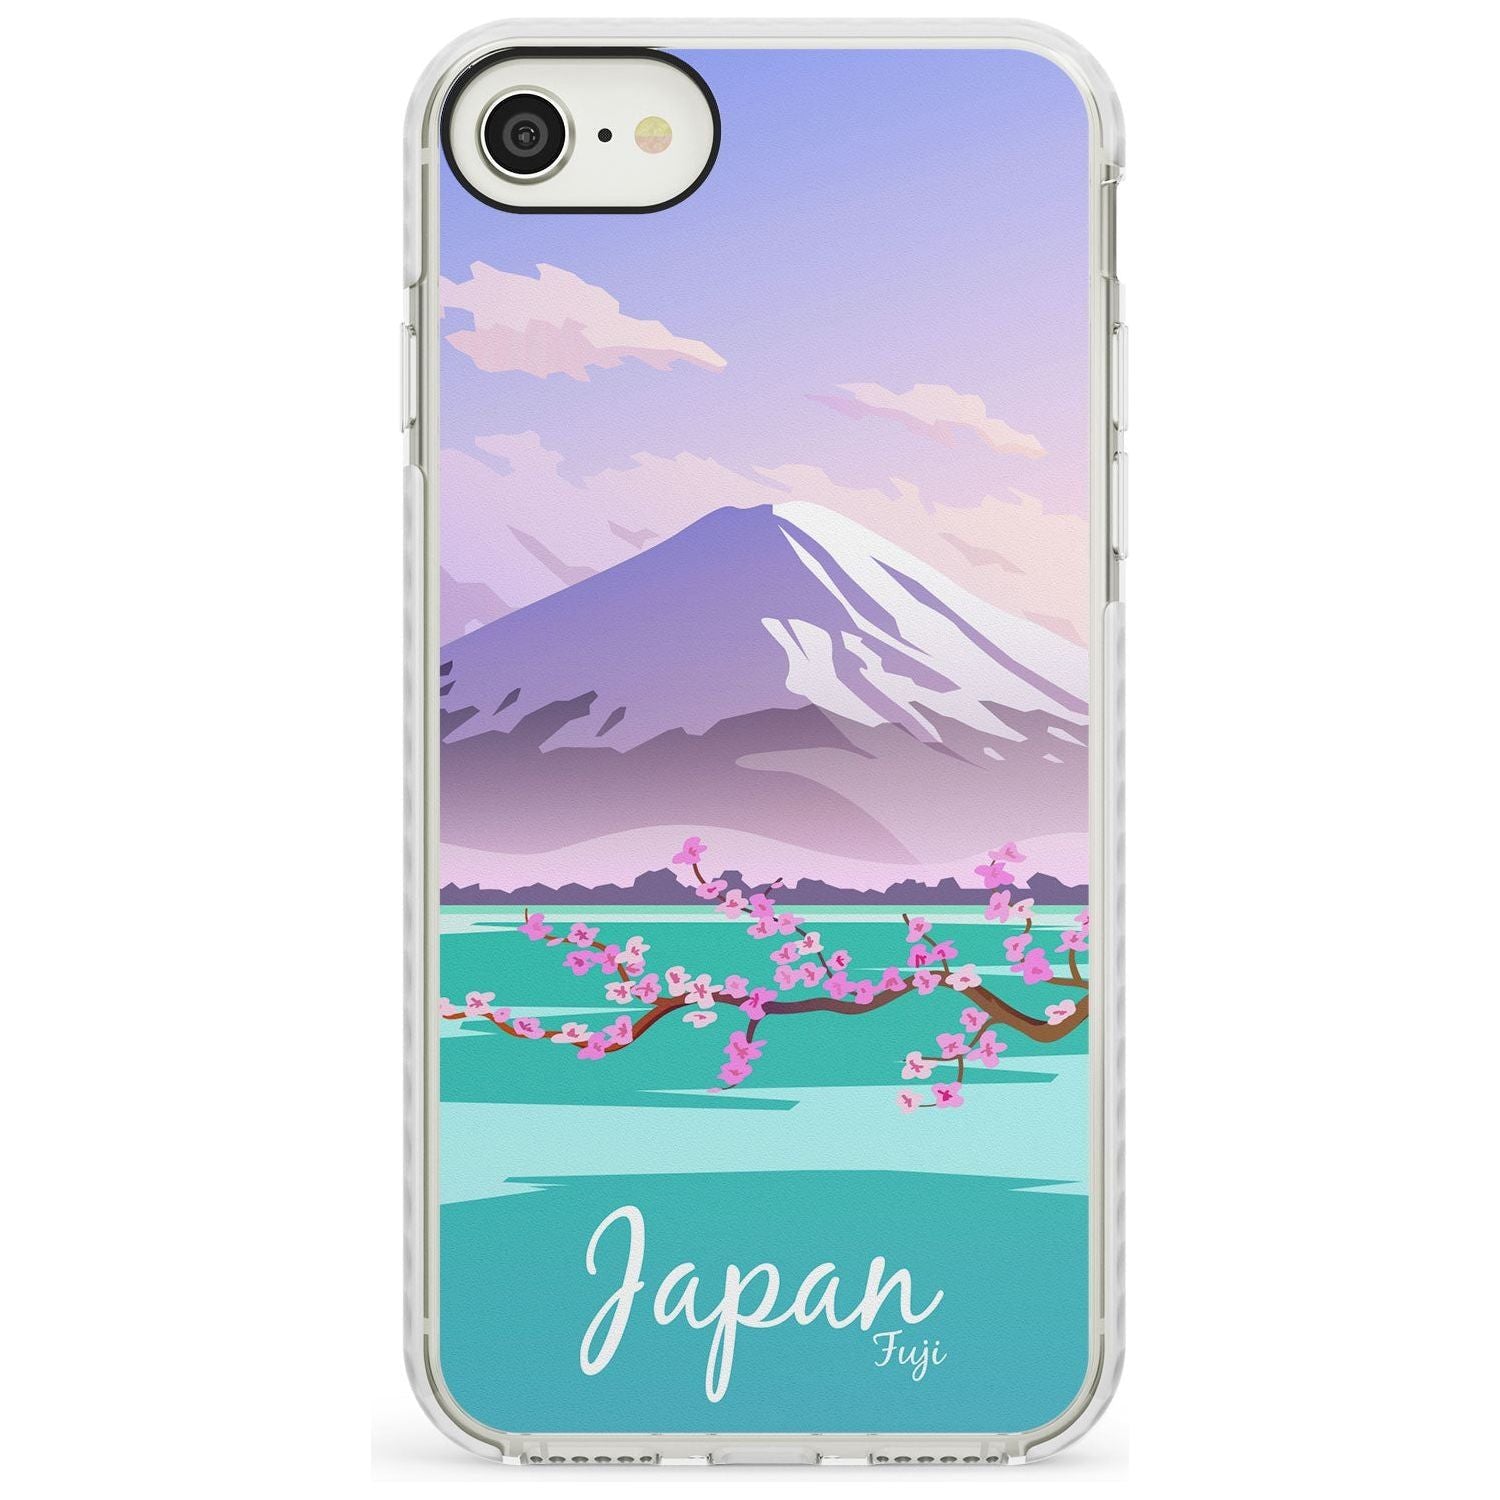 Vintage Travel Poster Japan Impact Phone Case for iPhone SE 8 7 Plus